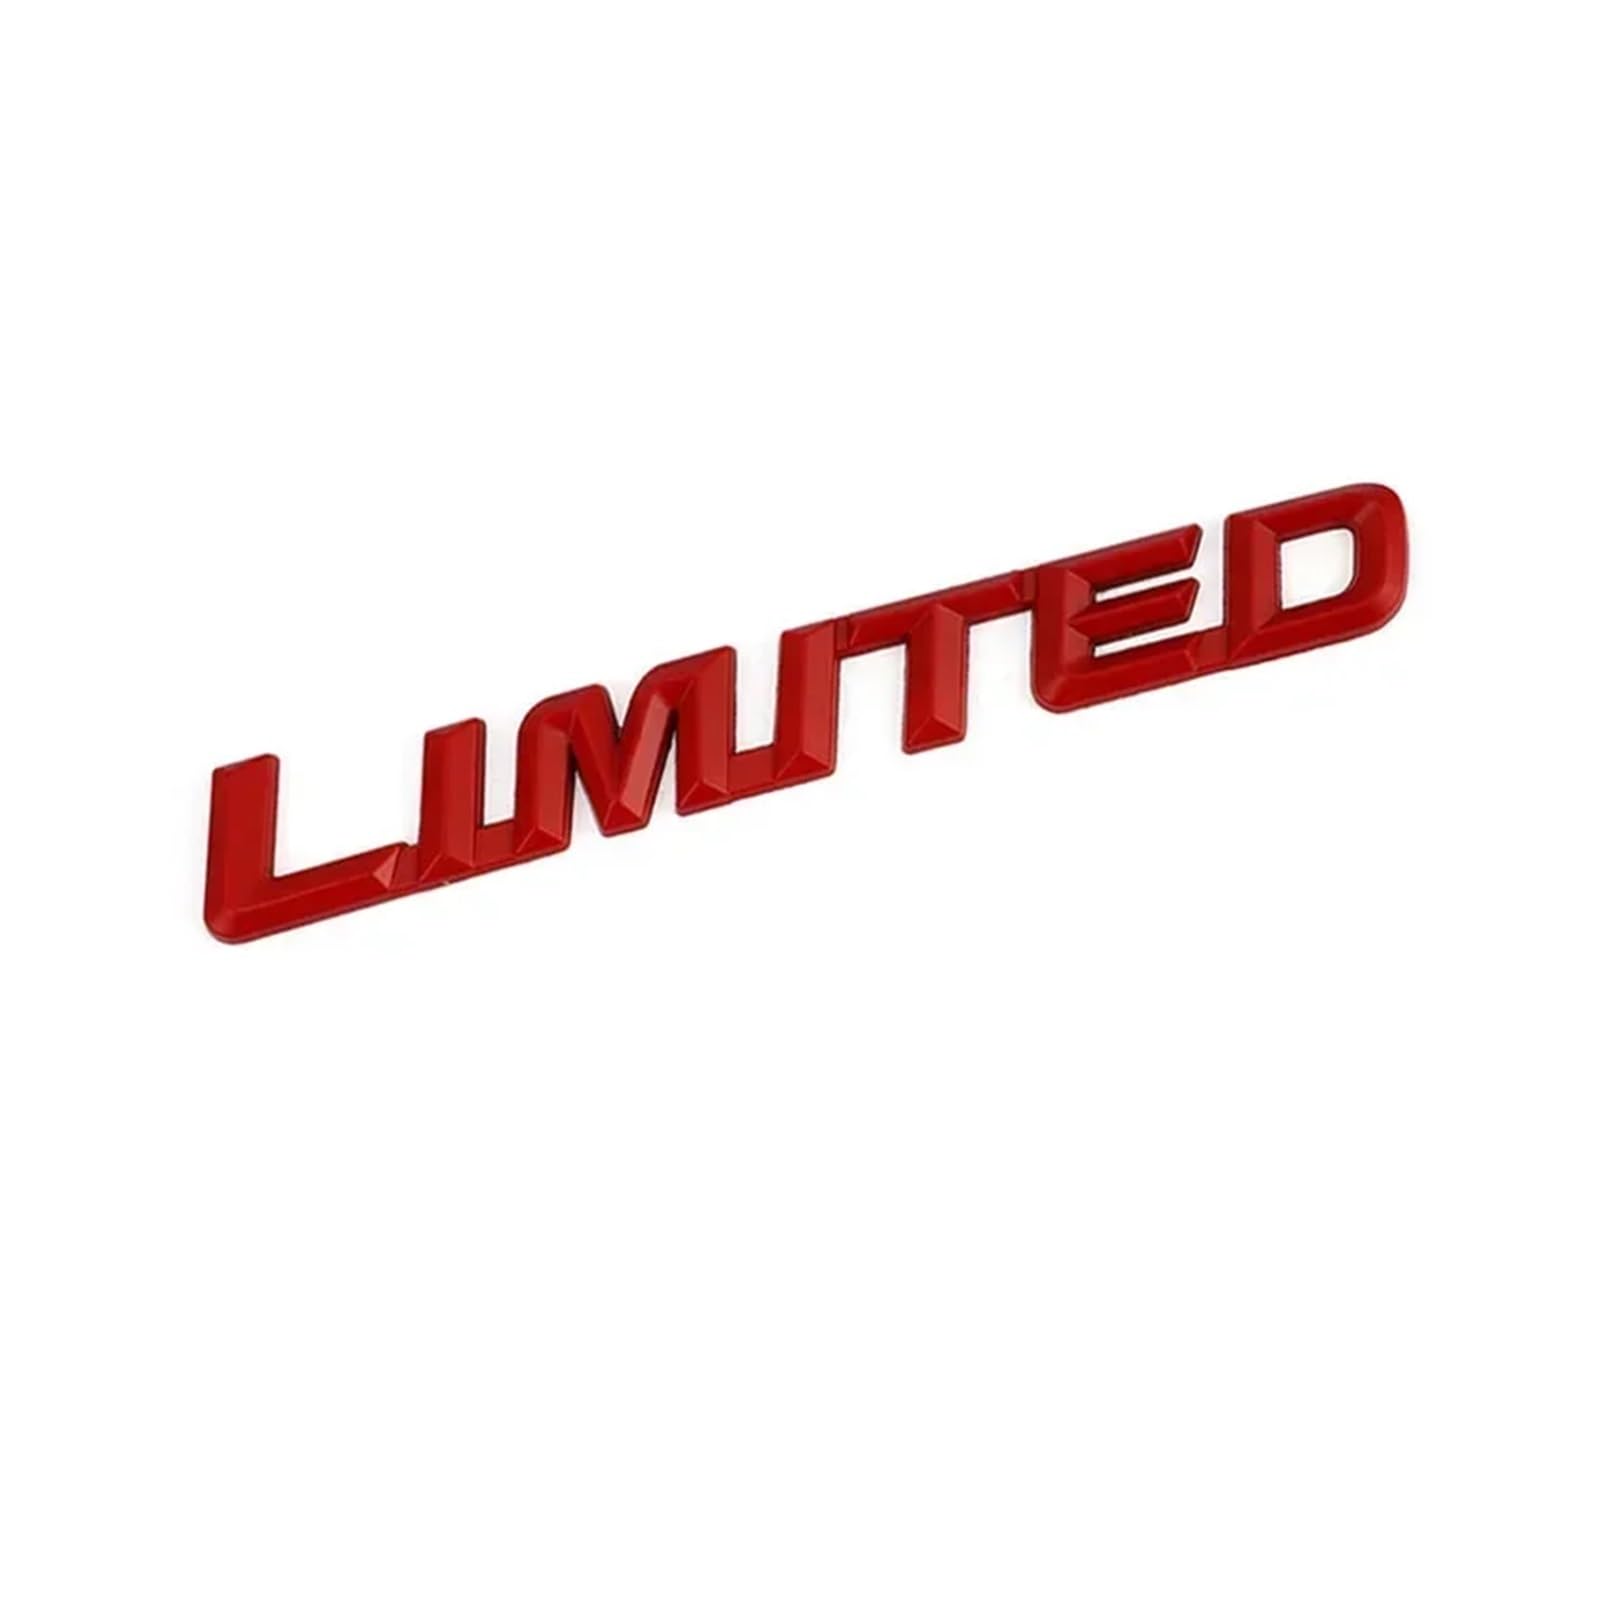 AQXYWQOL 3D-Metall-Limited-Logo for den hinteren Kofferraum, Kotflügel, Emblem, Abzeichen, Aufkleber, kompatibel mit Grand Cherokee Wrangler Compass, Auto-Styling-Zubehör Farbe ist konstant, verblasst von AQXYWQOL